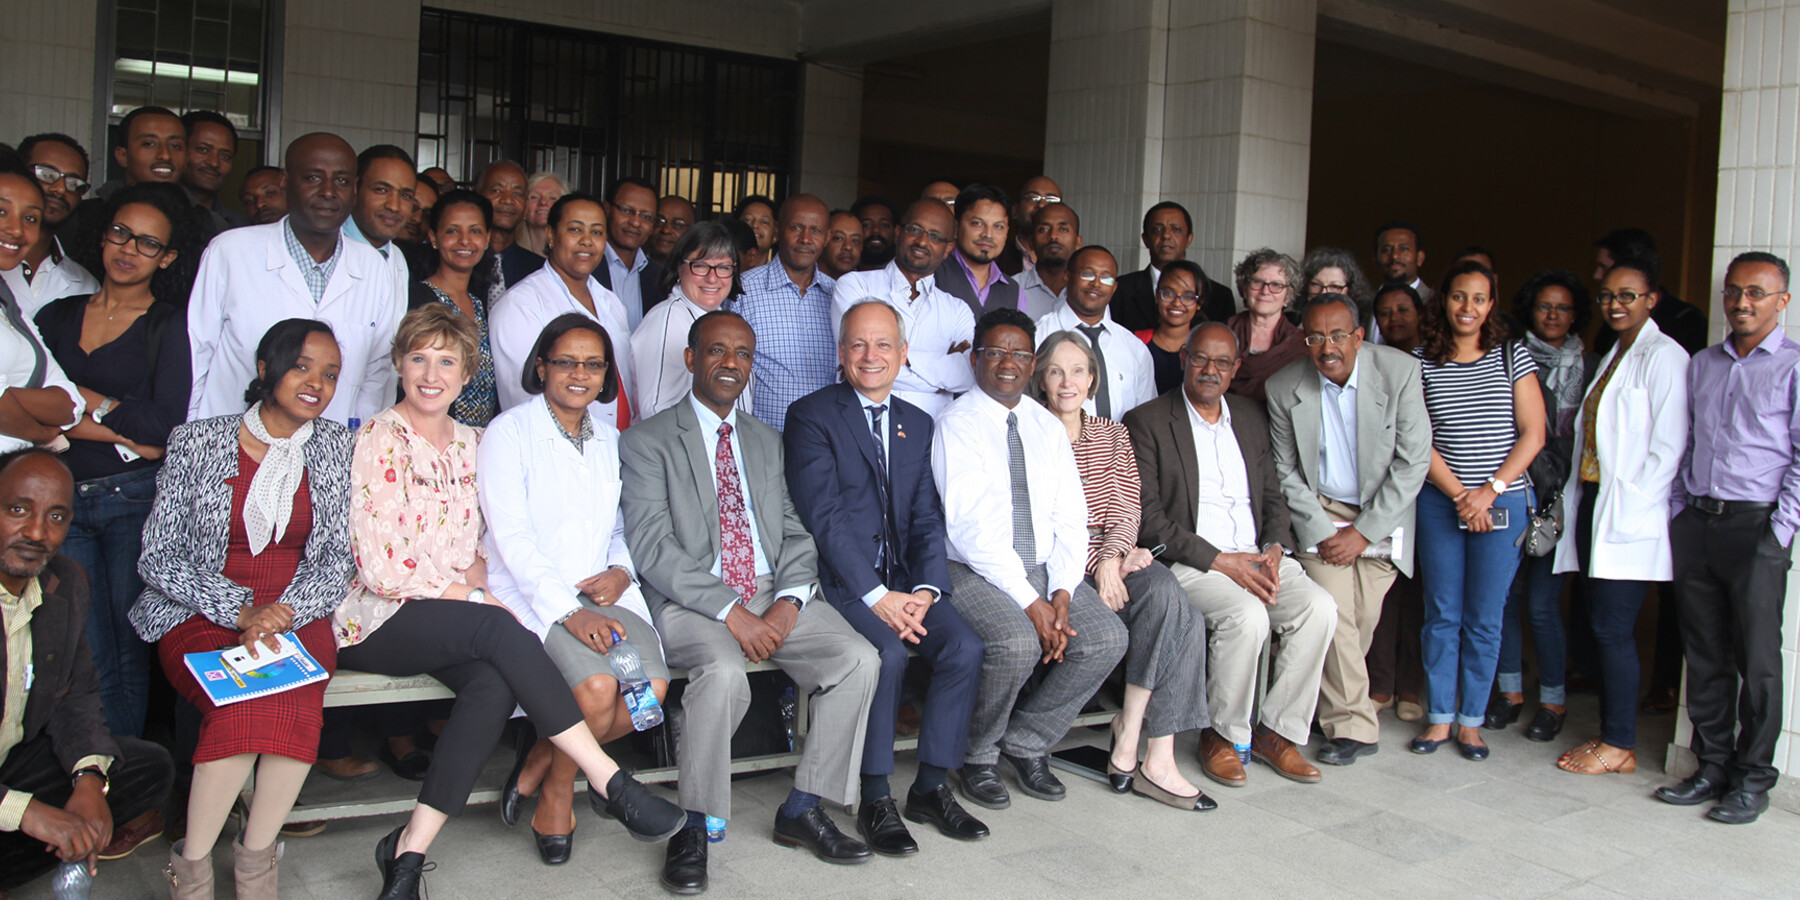 President Gertler's visit to Addis Ababa